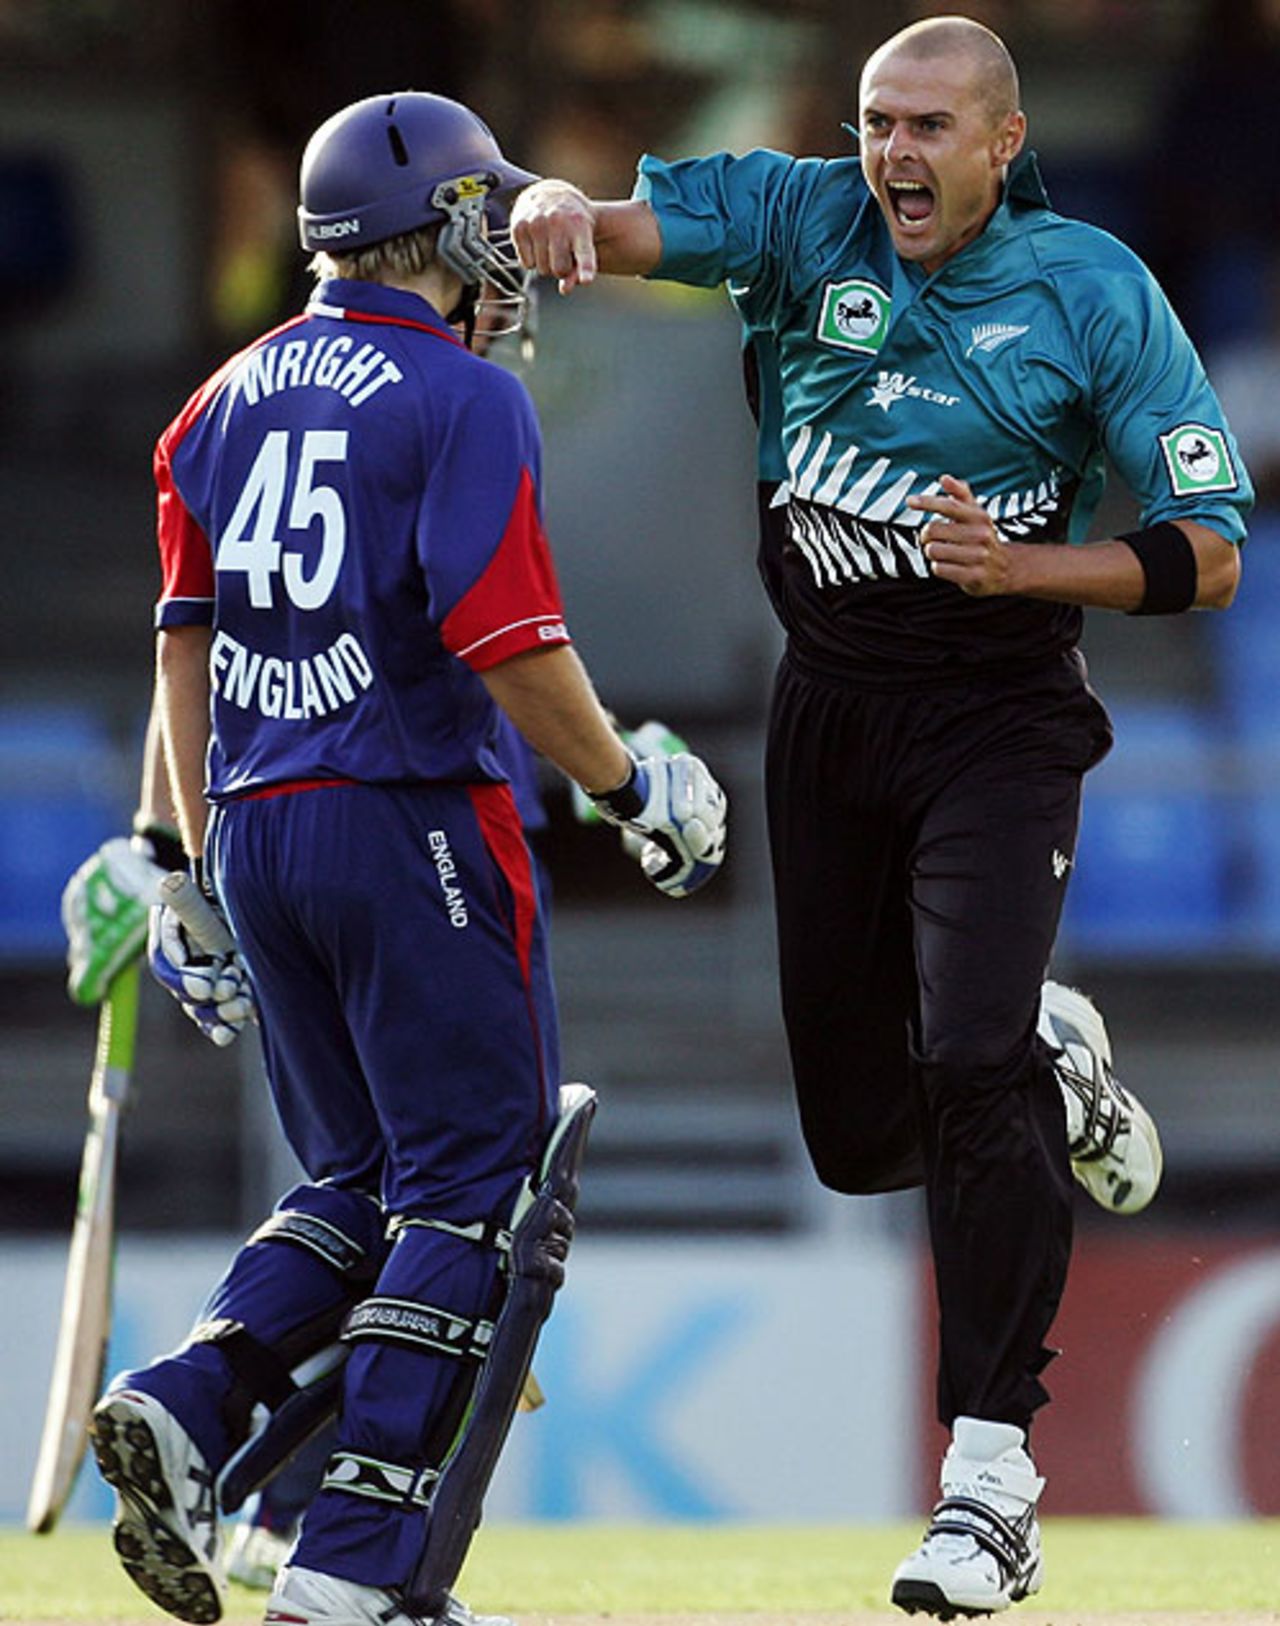 Chris Martin celebrates as Luke Wright is caught behind, New Zealand v England, 1st Twenty20, Auckland, February 5, 2008